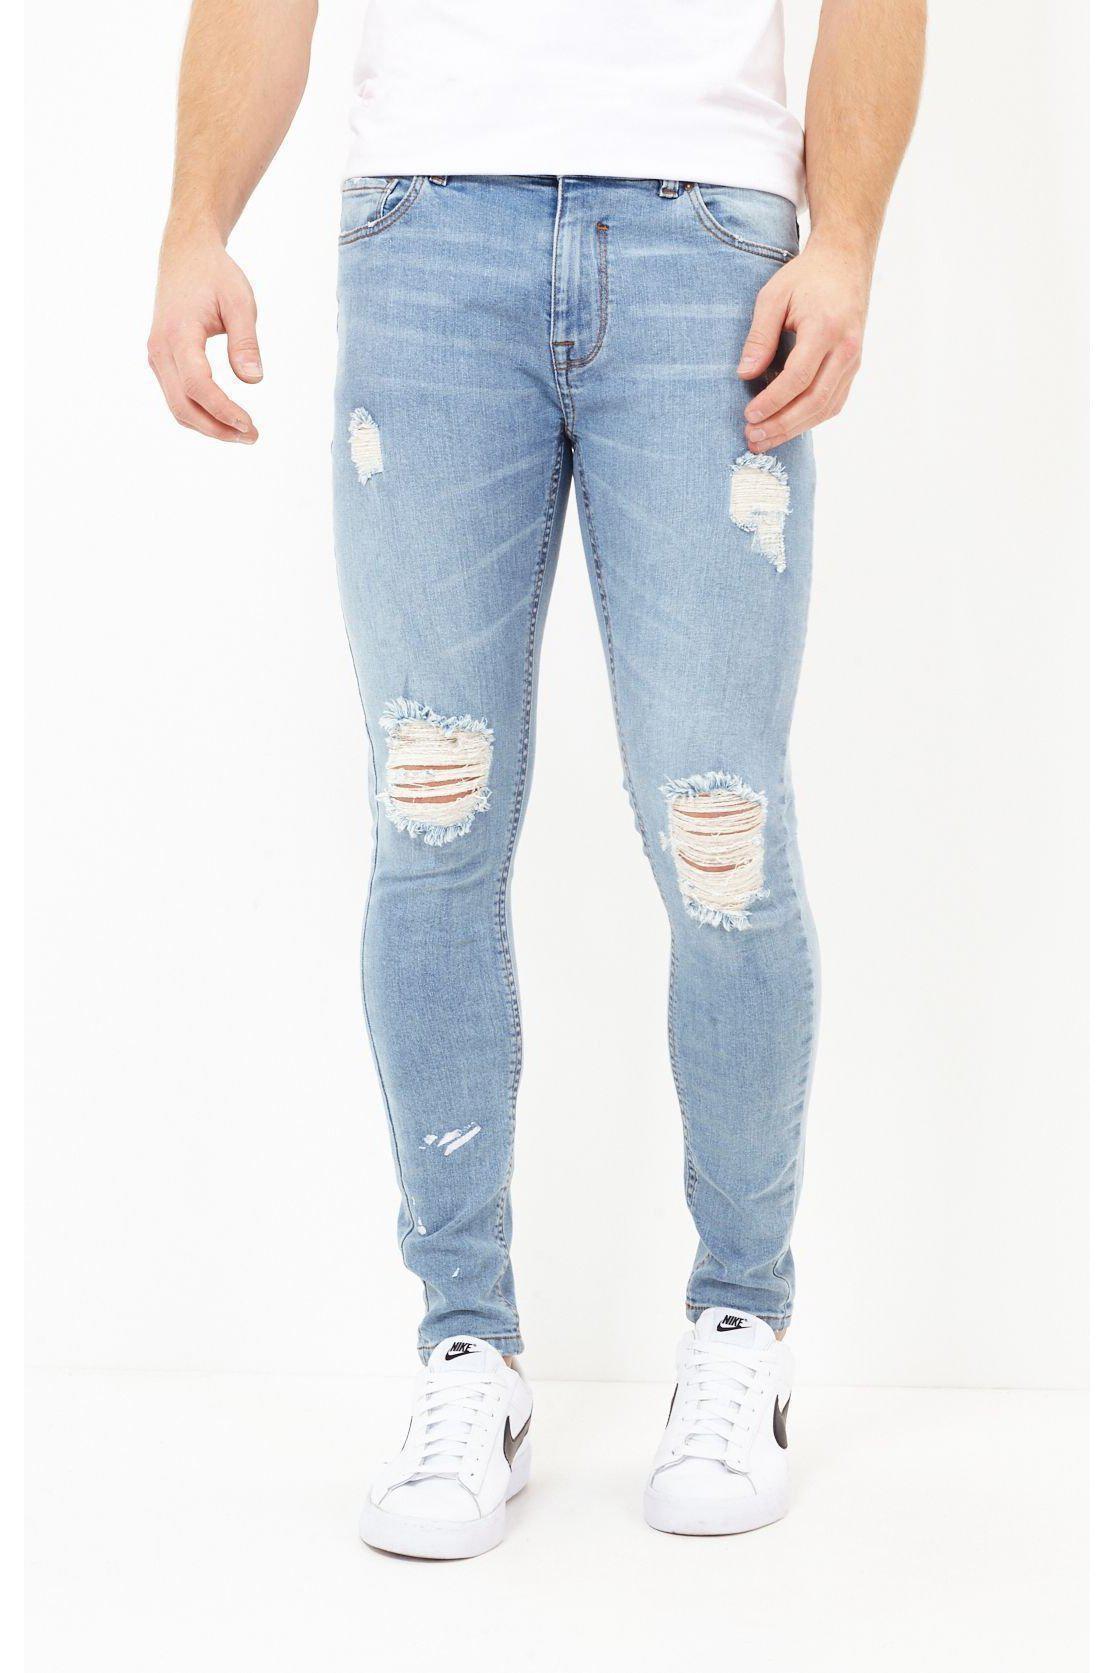 Jeans - Stretch Skinny Destroyed Jeans Blue